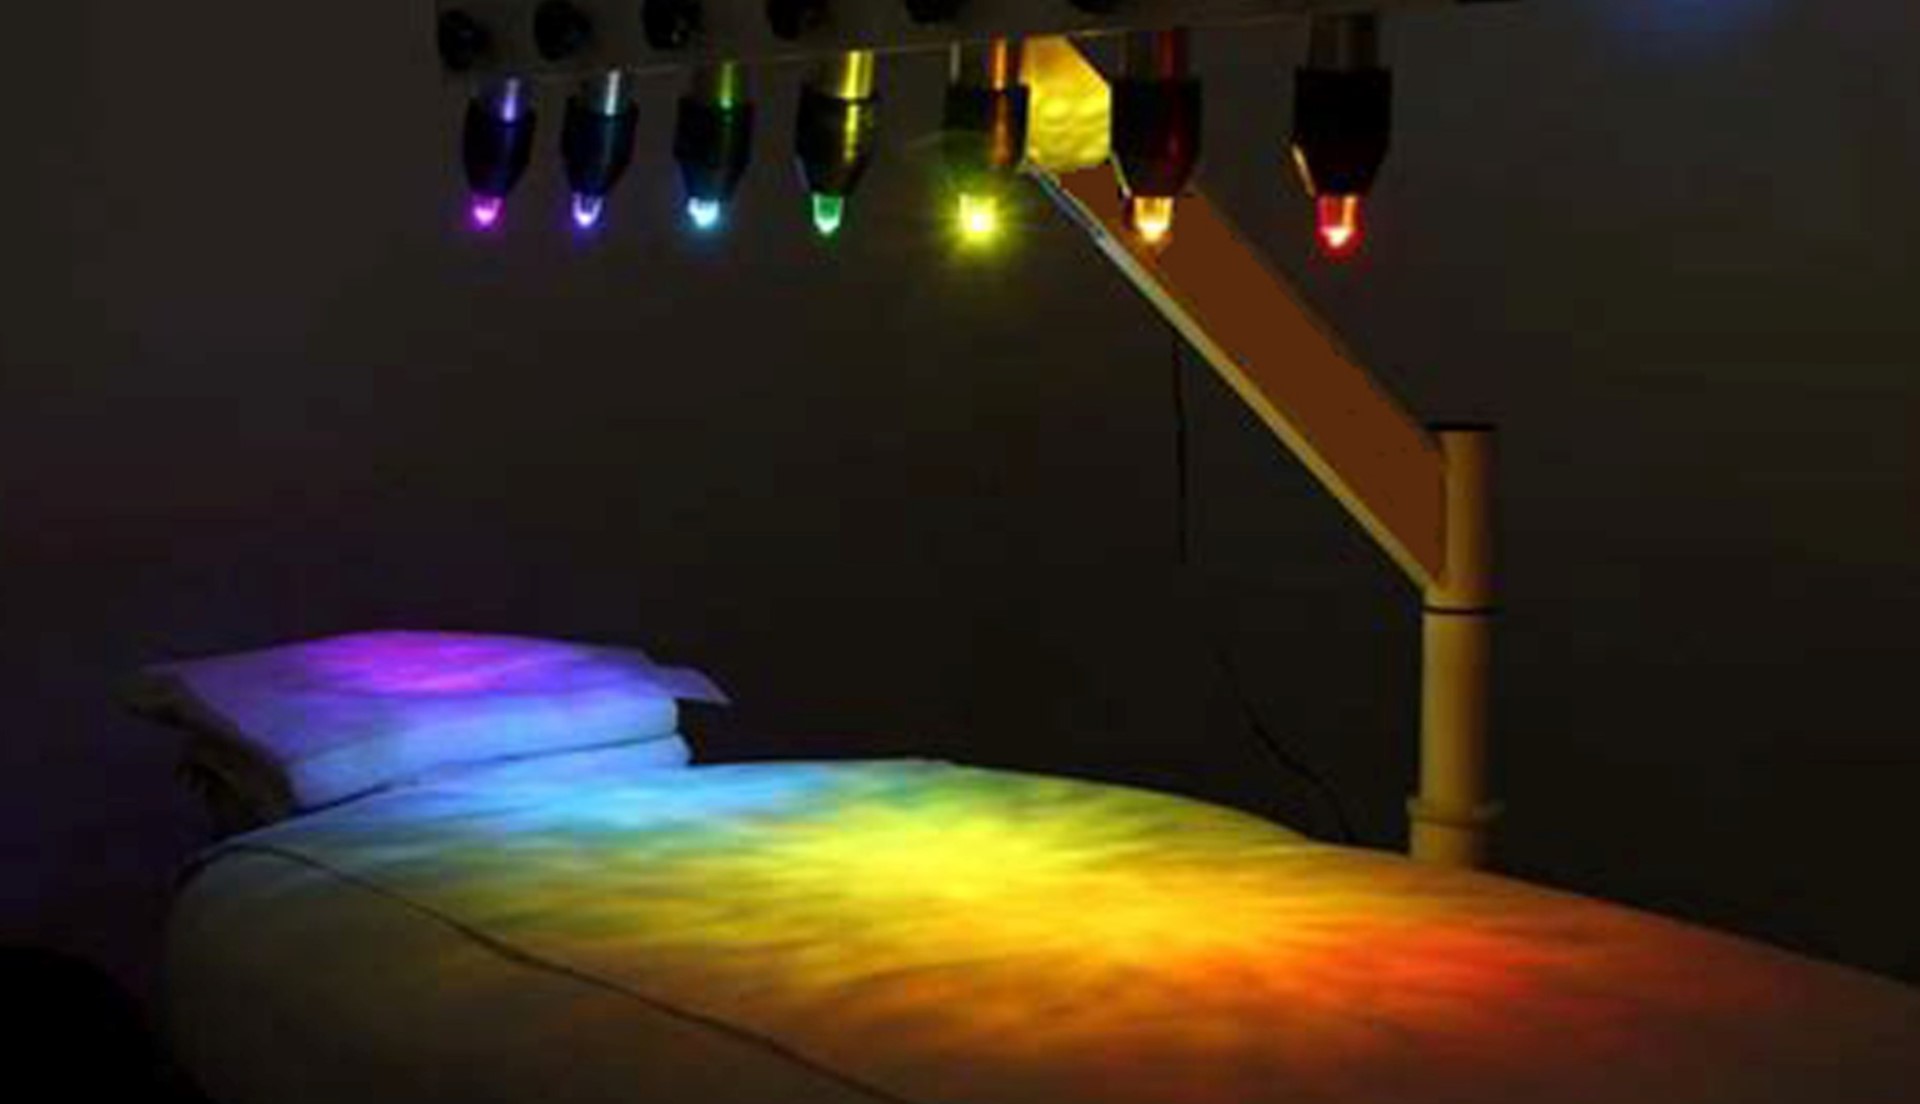 Cama de cristal: cama con un brazo con luces de diferentes colores encendidas